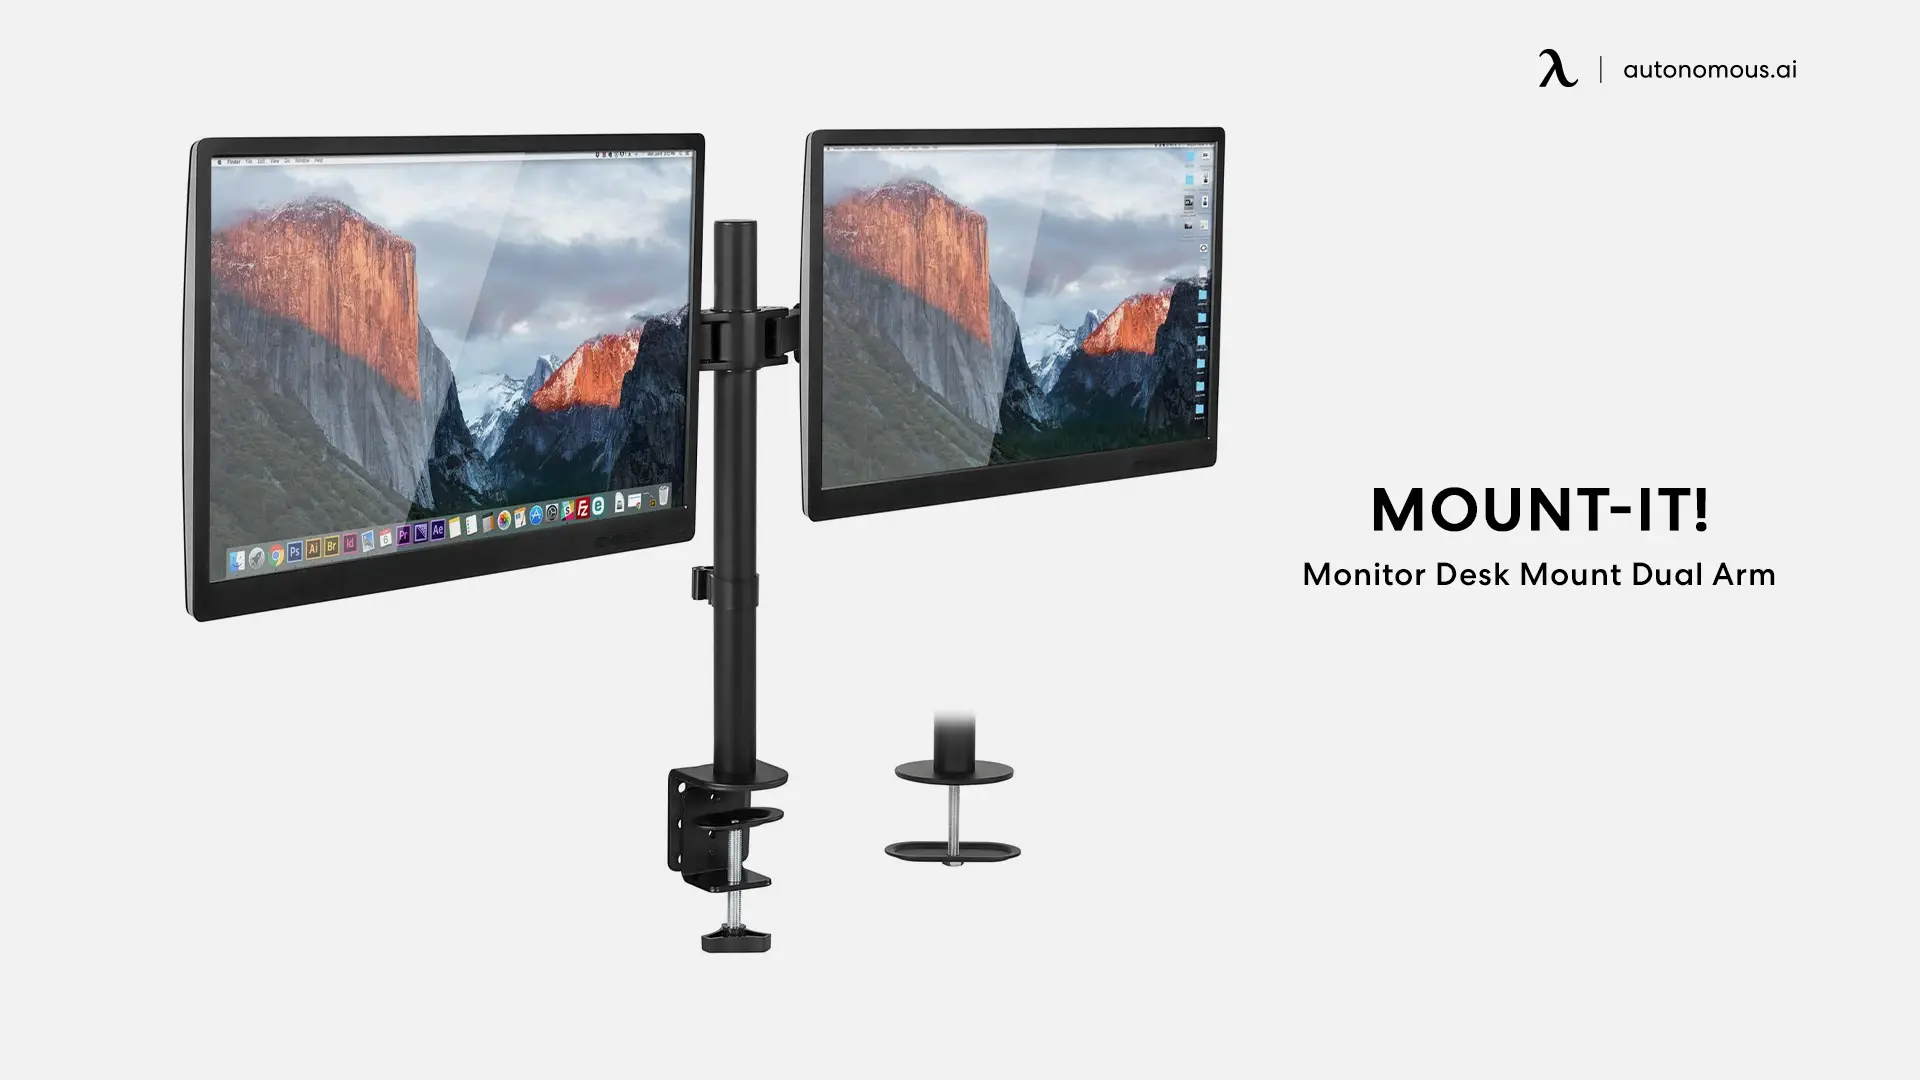 Mount-It! Monitor Desk Mount Dual Arm